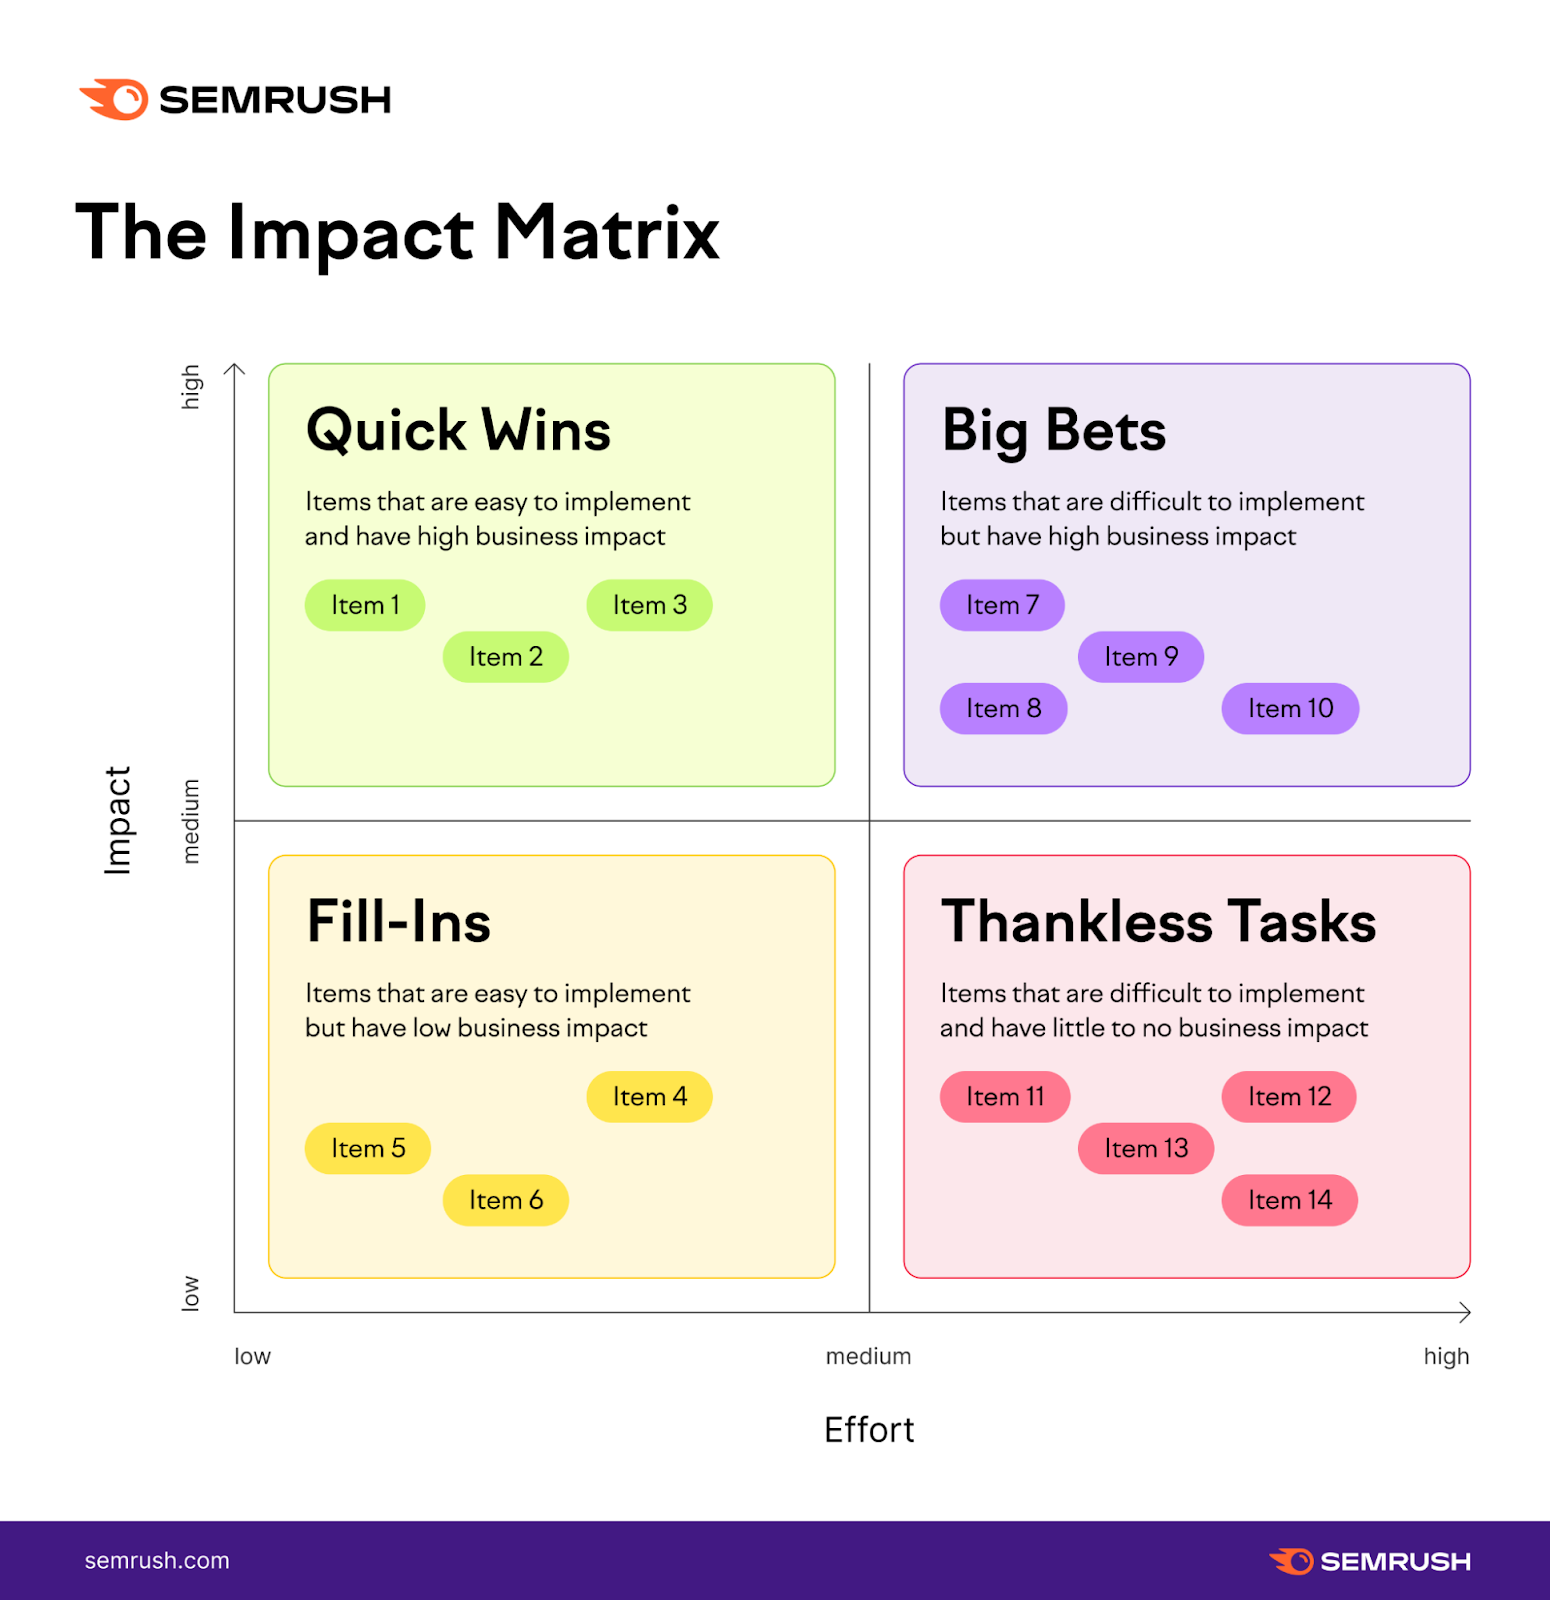 The four quadrants of the impact matrix